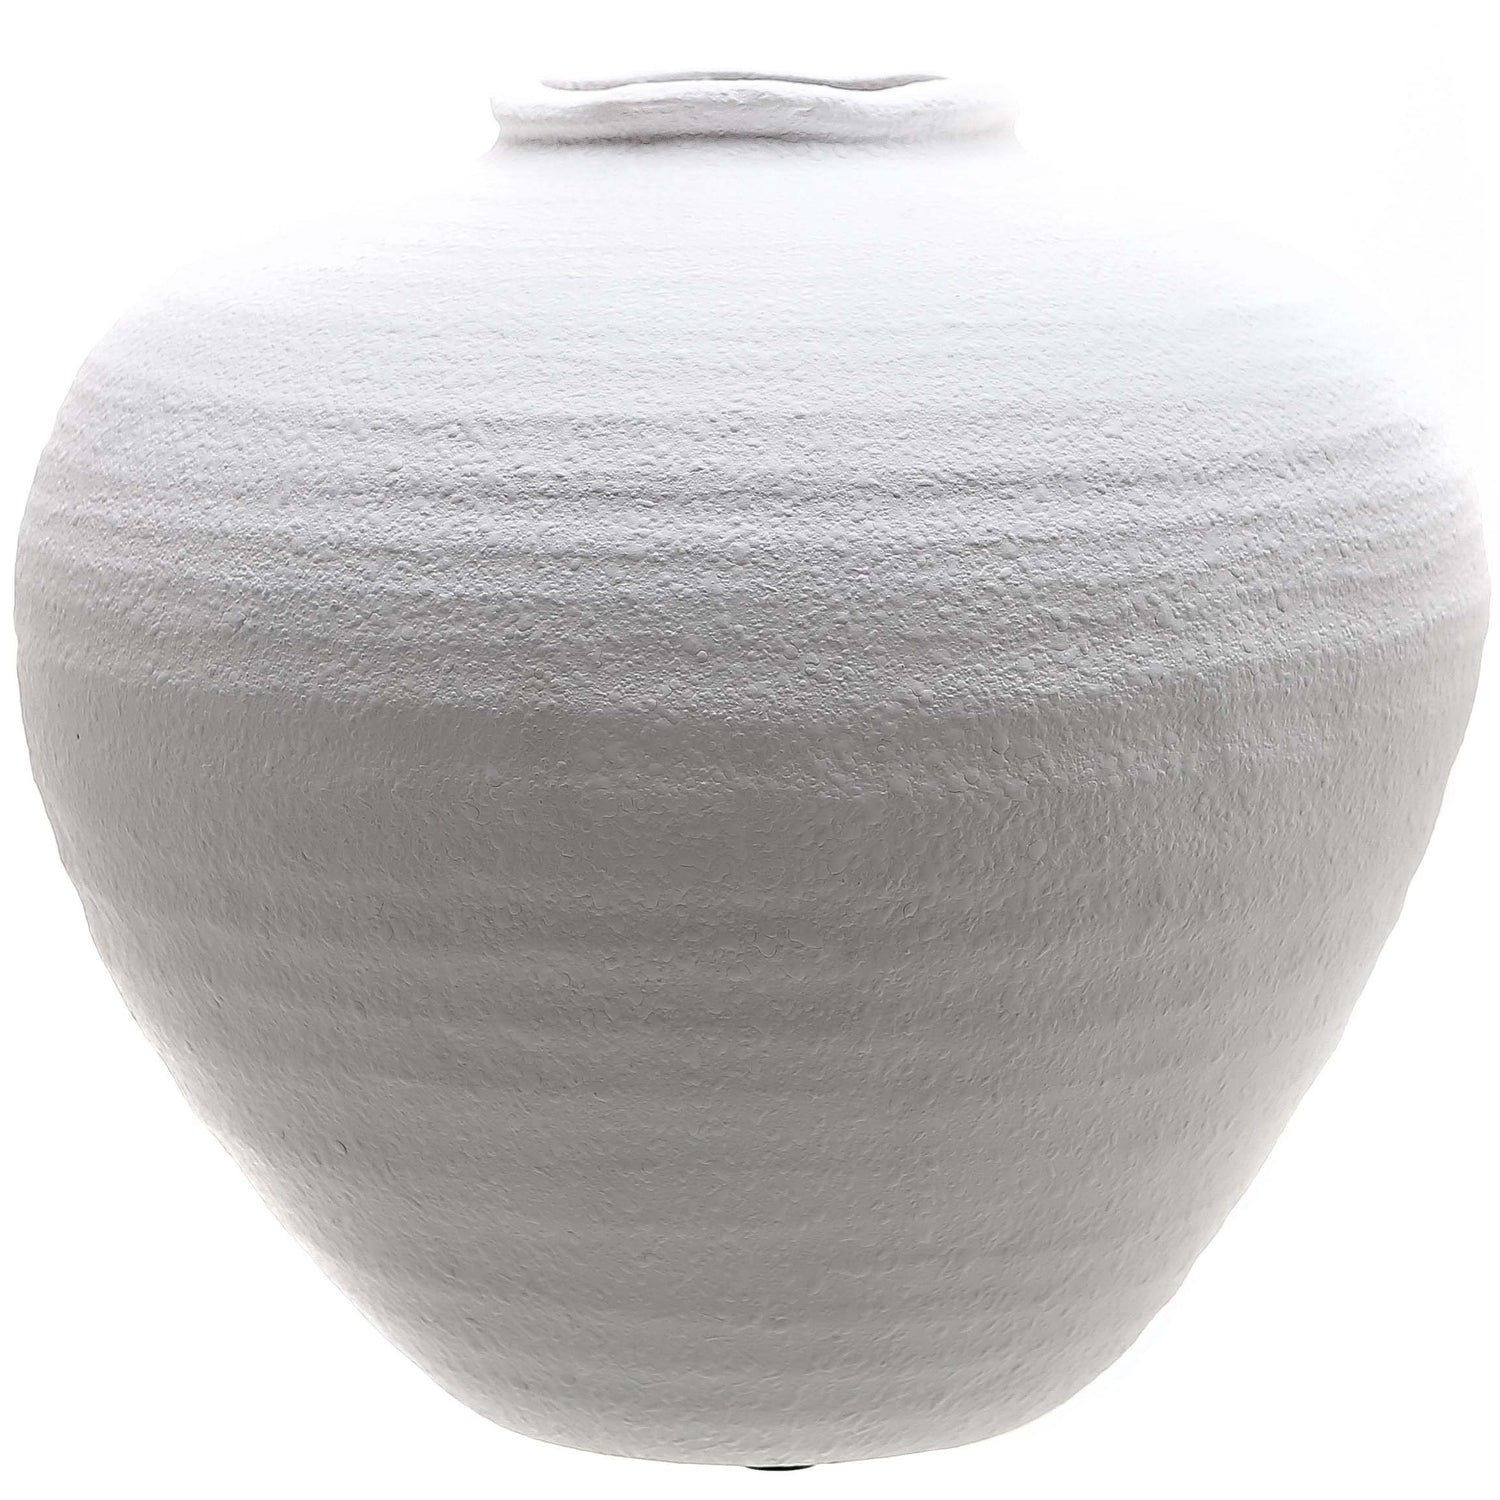 View Regola Matt White Ceramic Vase information